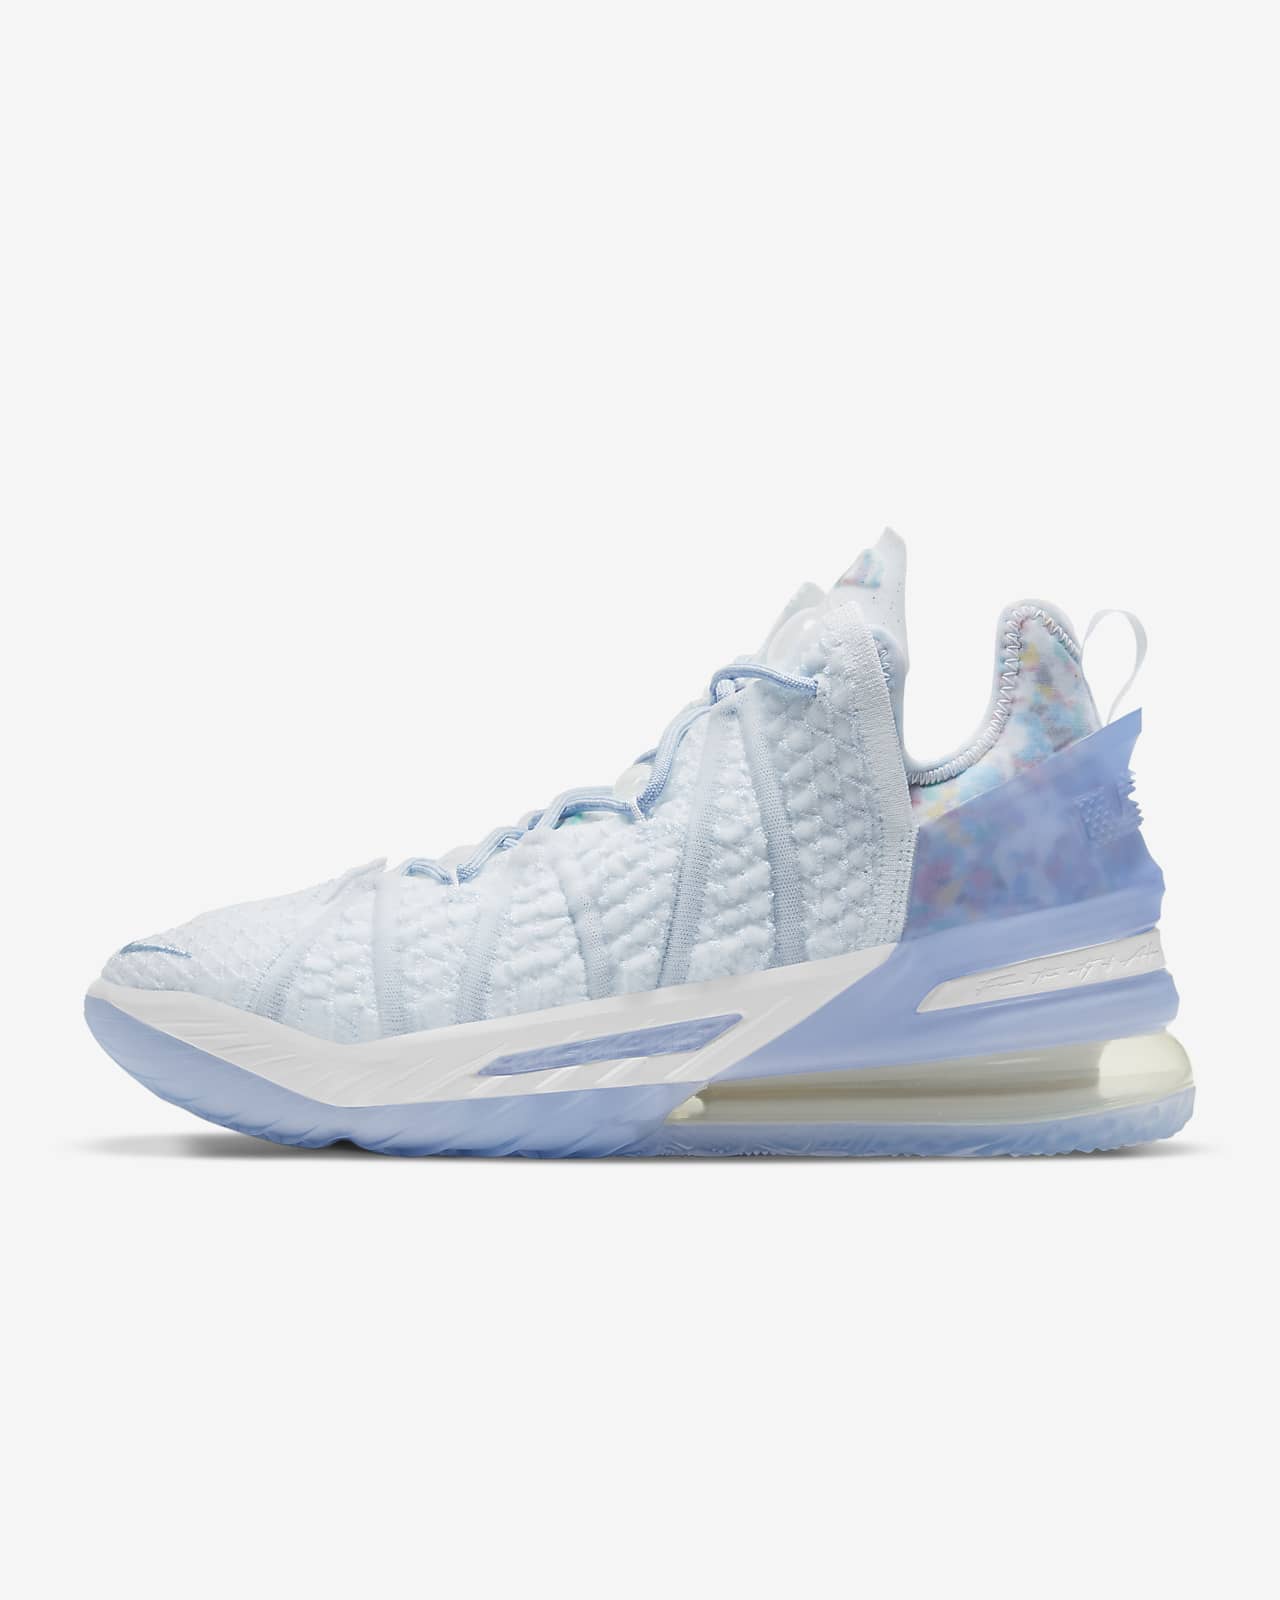 the Future' Basketball Shoe. Nike 